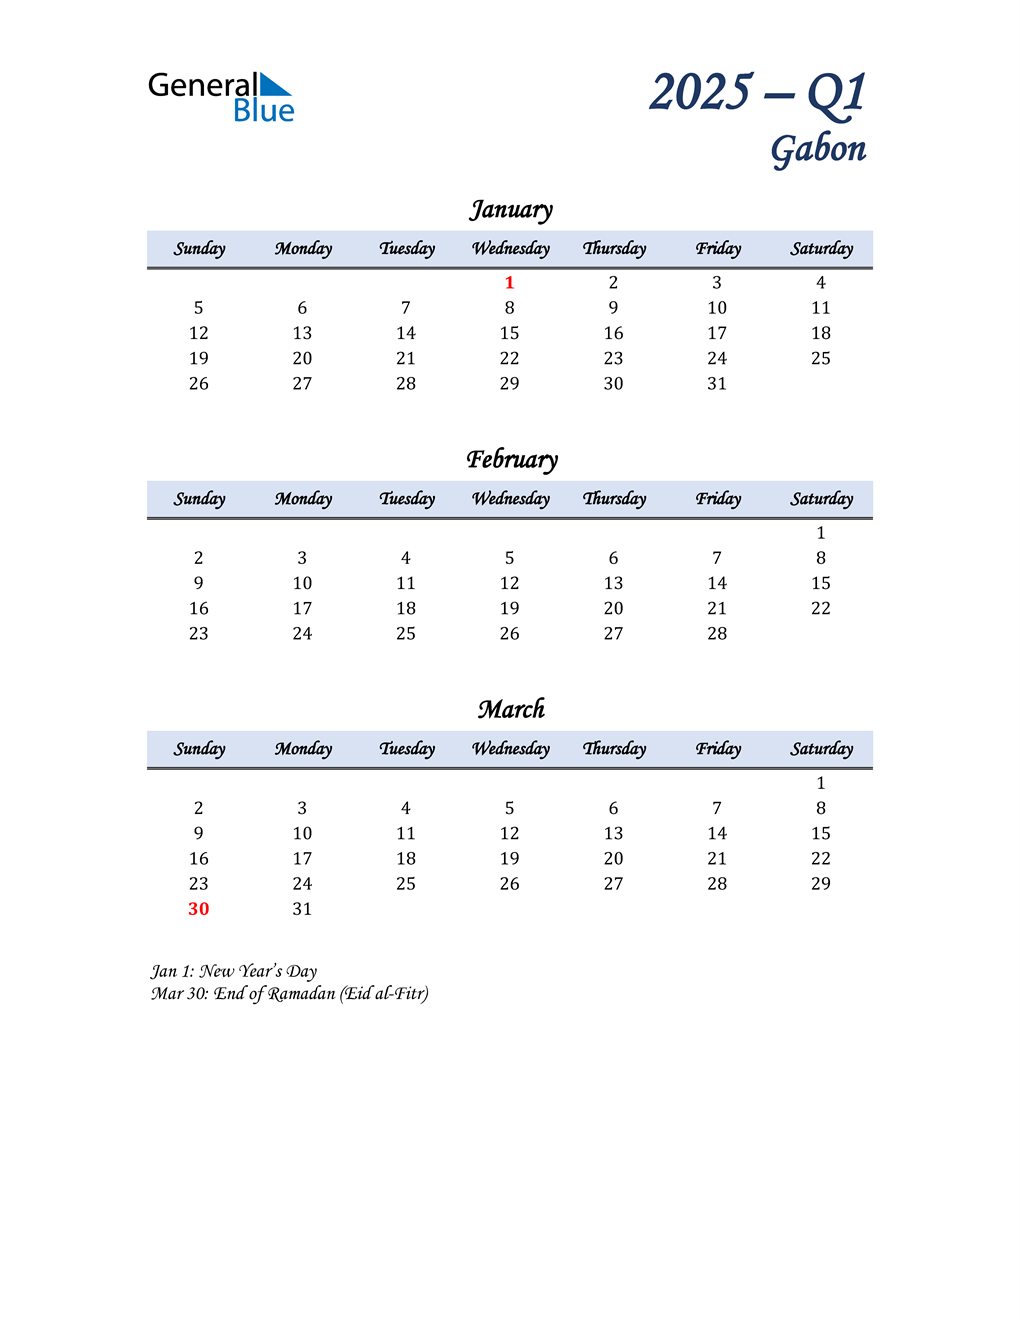  January, February, and March Calendar for Gabon